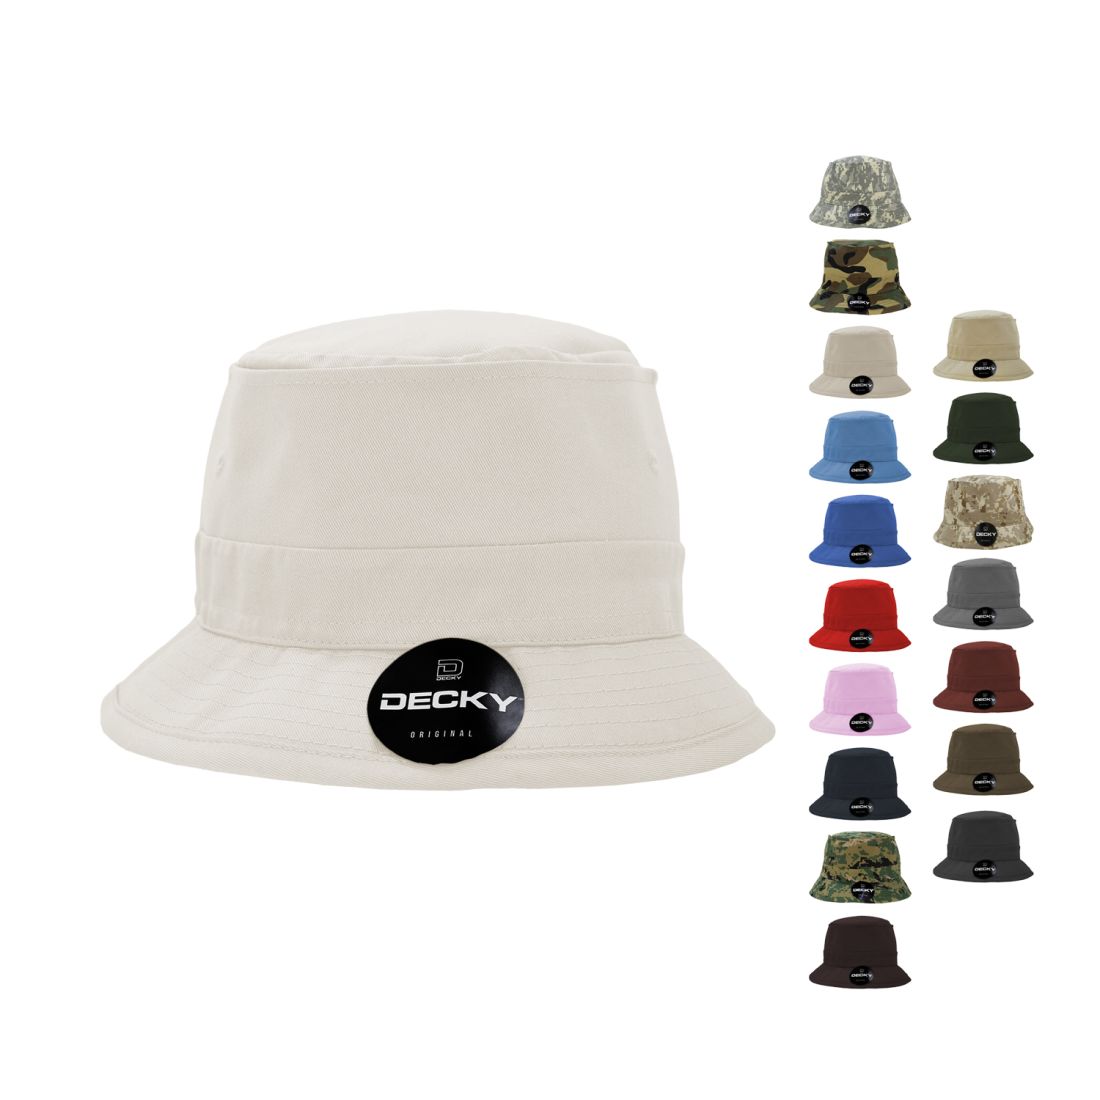 Decky 450 Structured Bucket Hats Cotton Fisherman Buckets Caps Blank, Red / Small/Medium